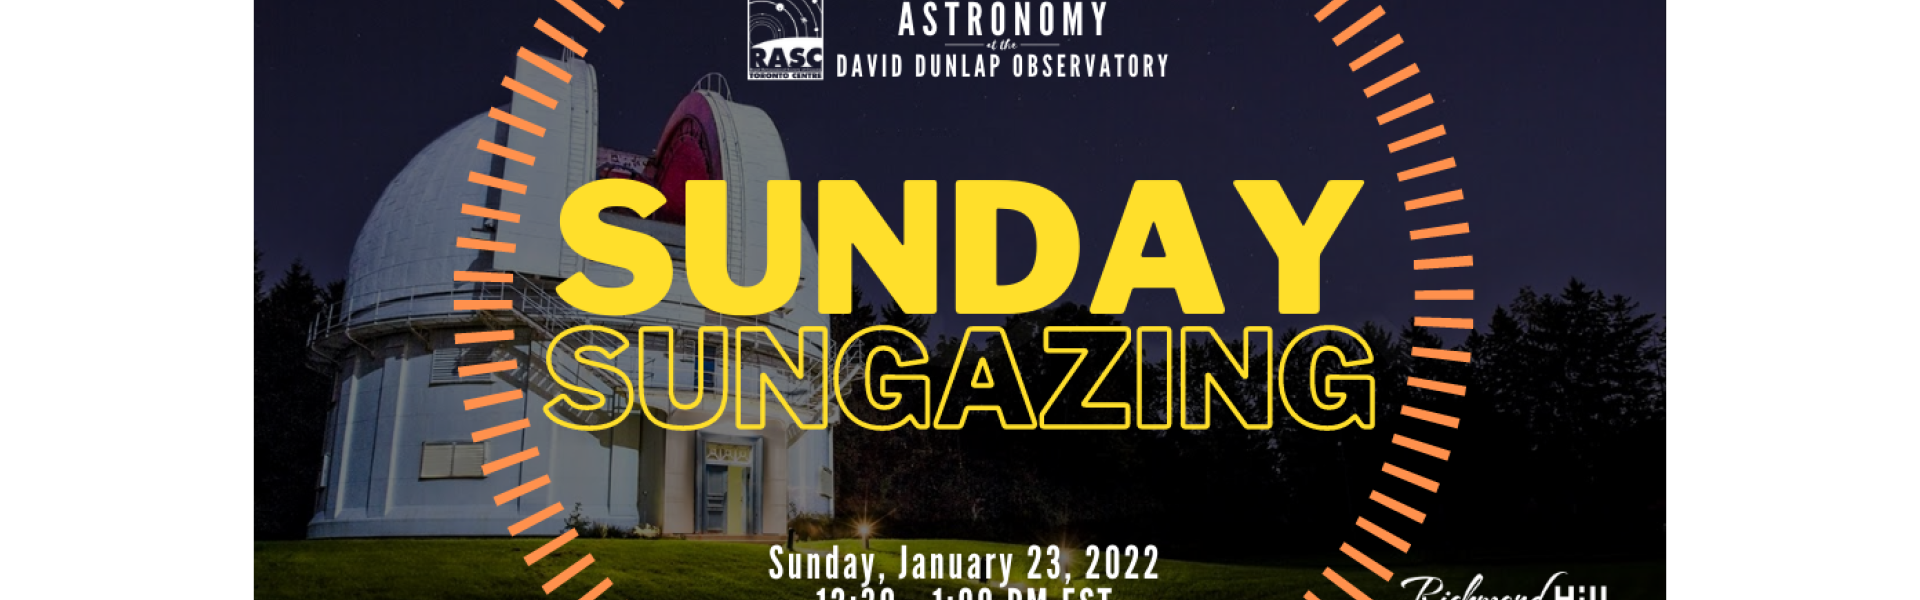 2022-01-23 Sunday Sungazing